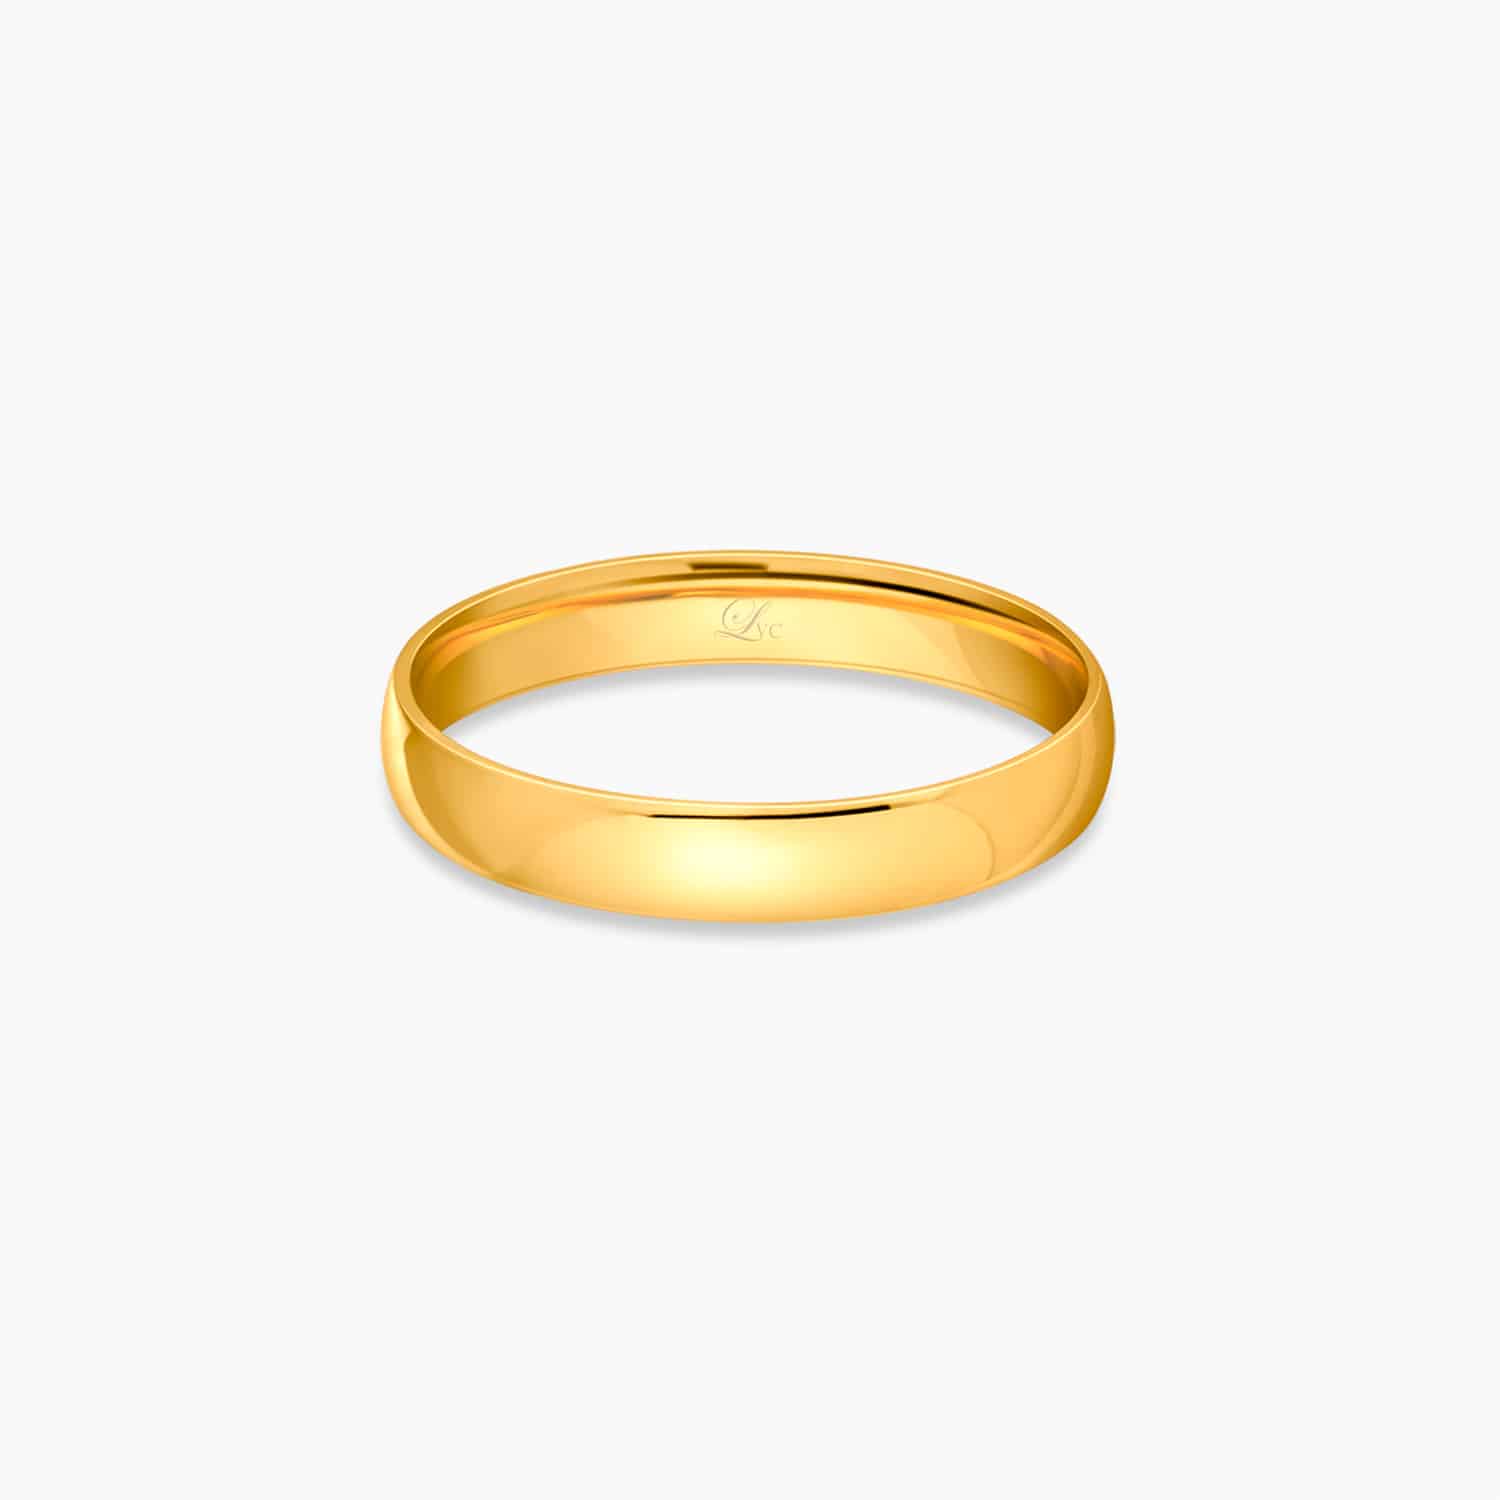 Cincin Belah Rotan atau cincin merisik Emas untuk bakal pengantin perempuan